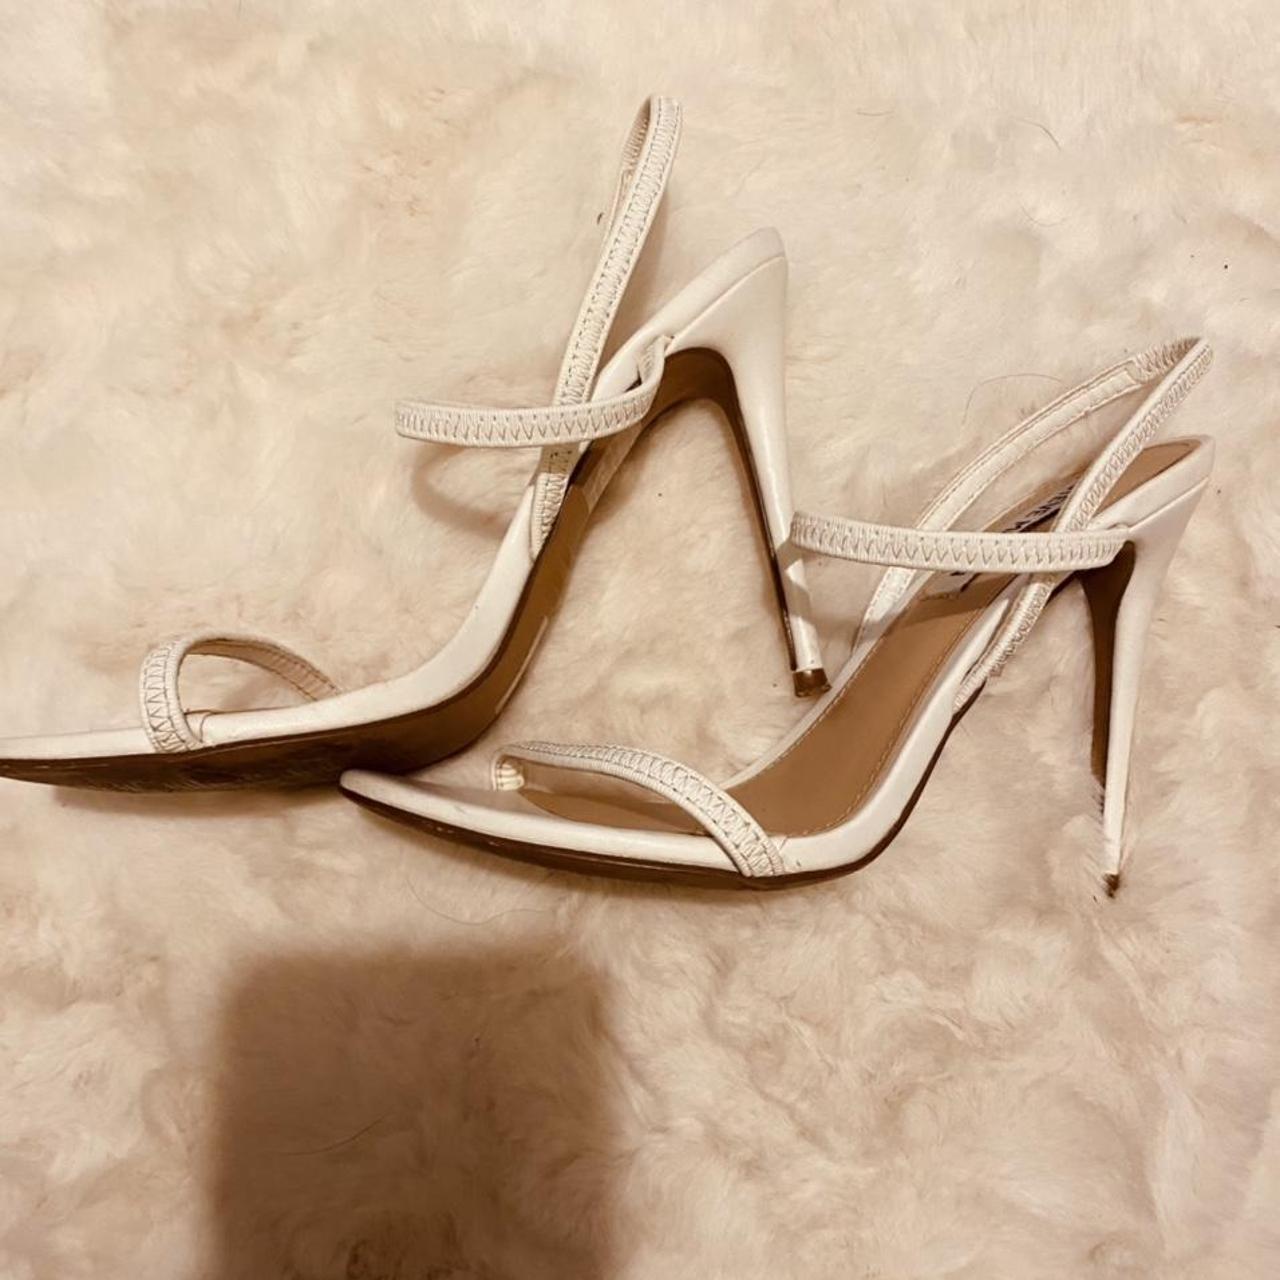 Product Image 3 - Steve Madden white stiletto heels
Great